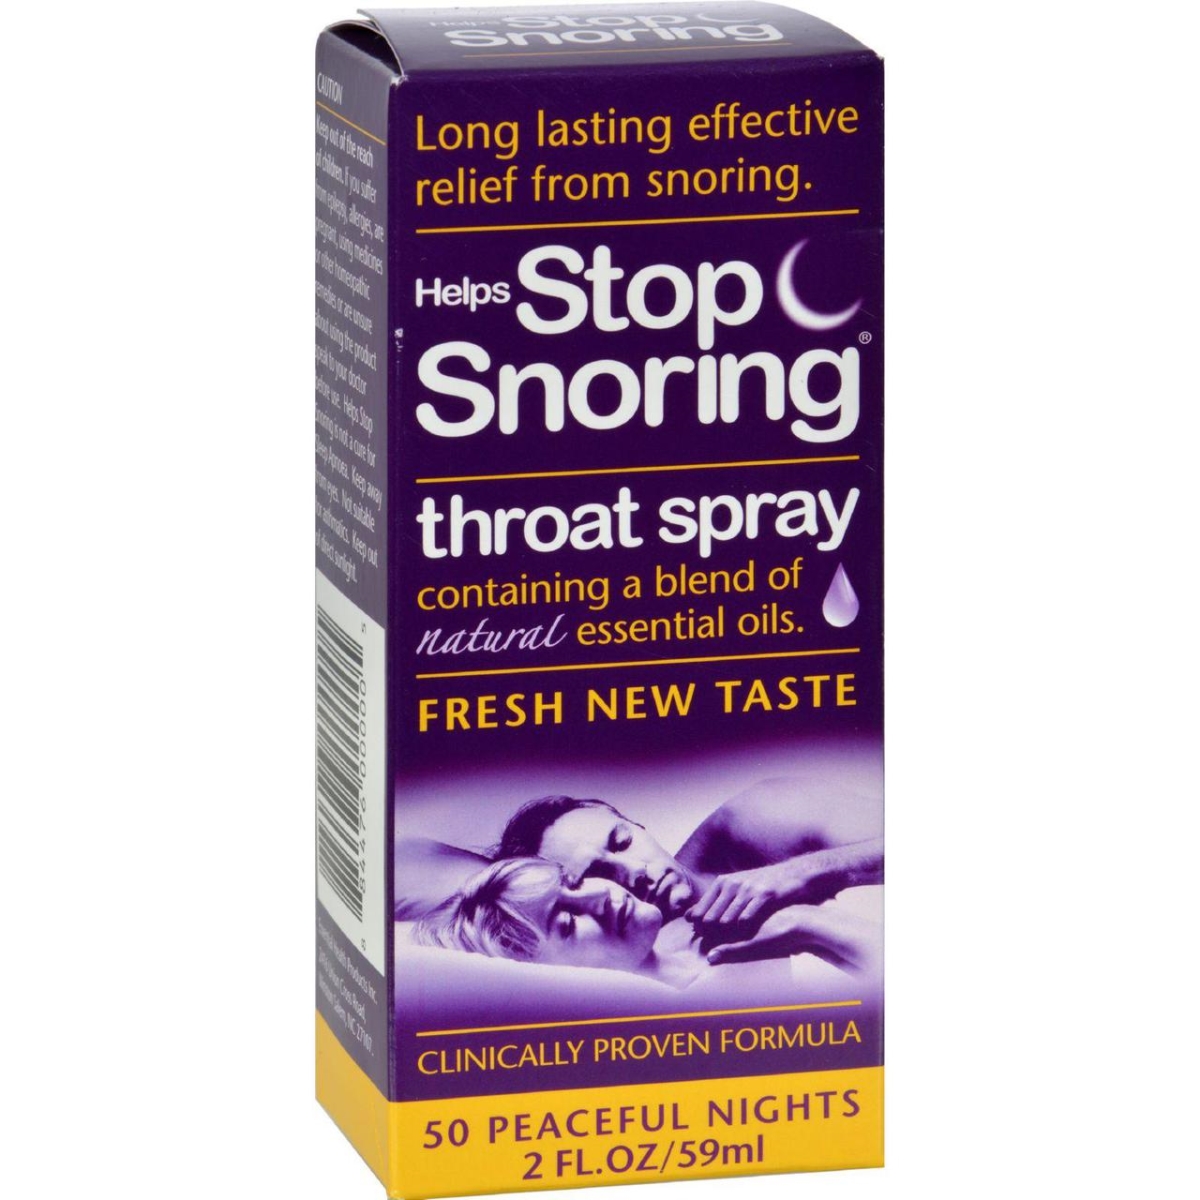 Hg0717983 2 Fl Oz Health Helps Stop Snoring Throat Spray